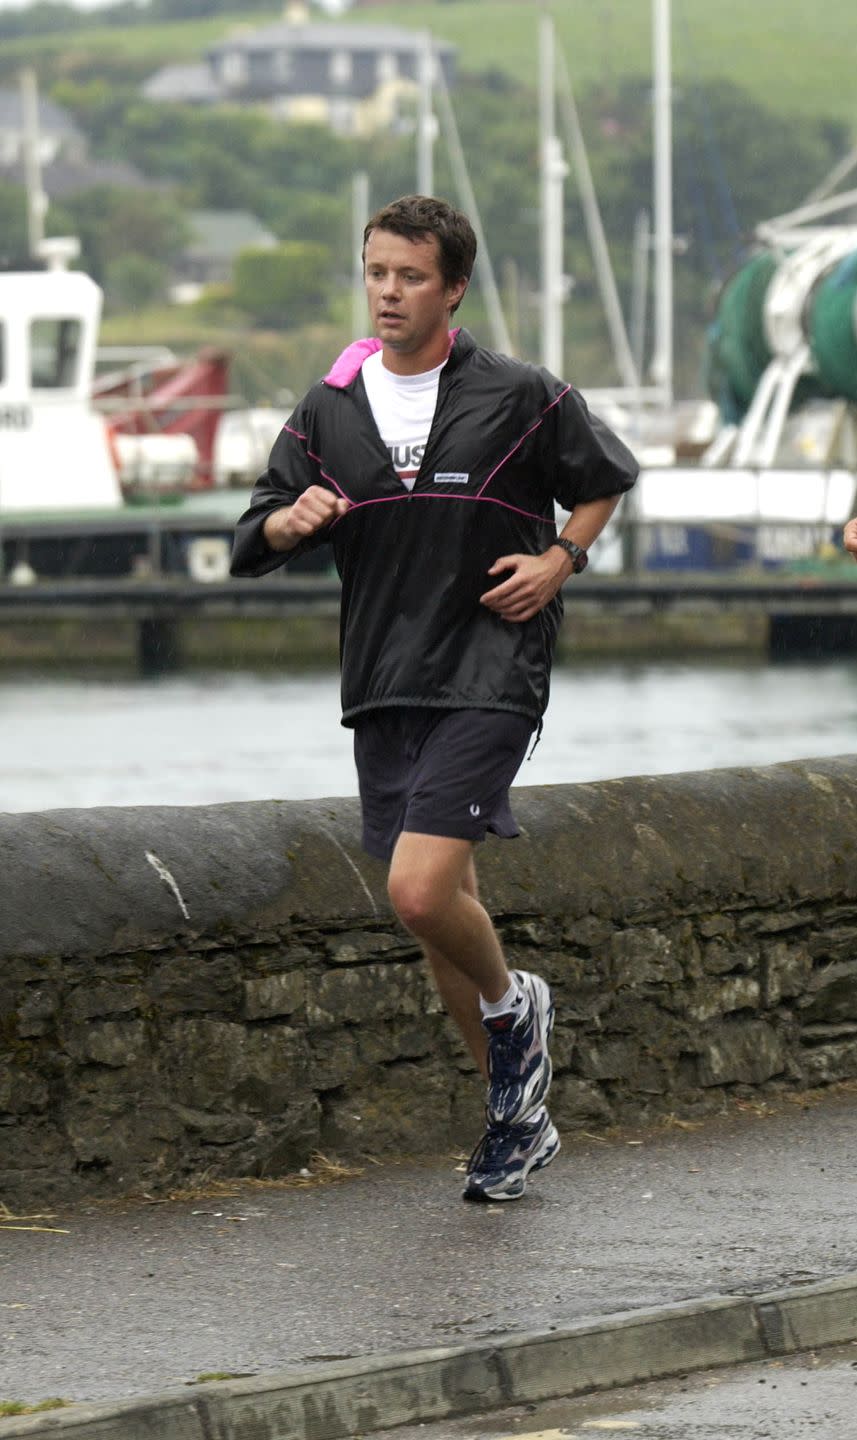 crown prince frederik of denmark jogging in ireland